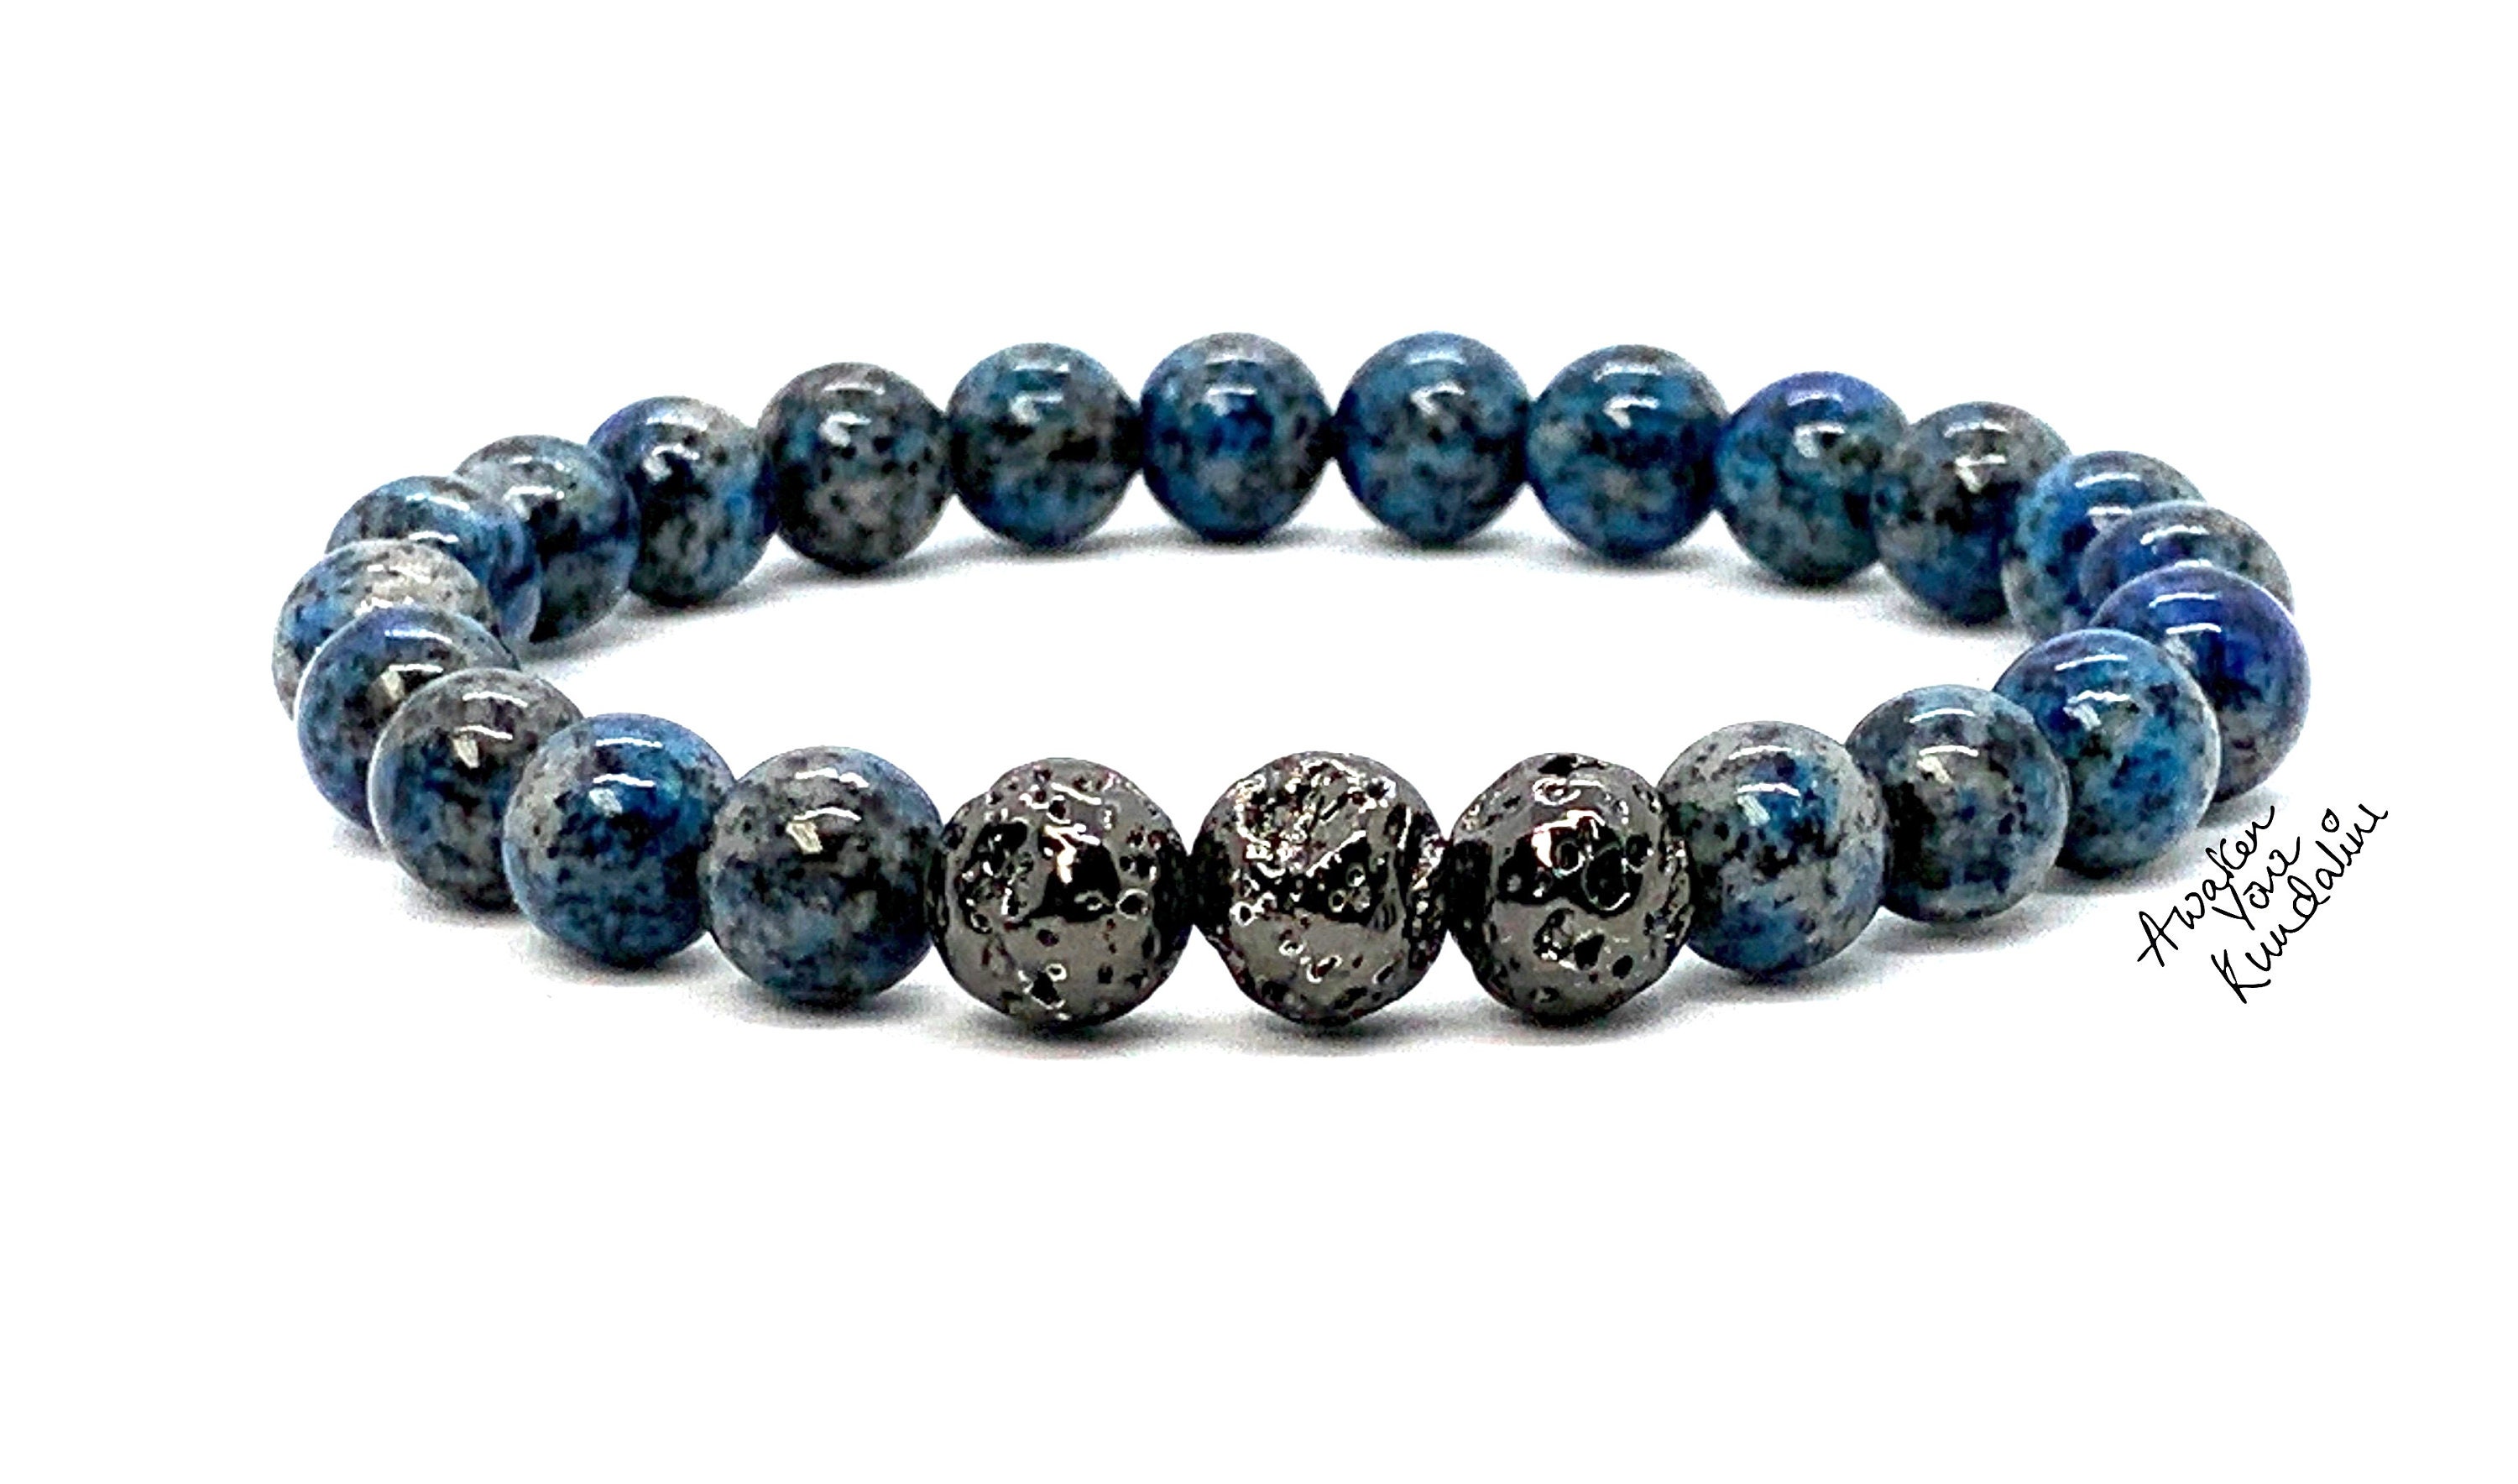 Botswana Agate Gemstone Bracelet Blue Color Beads, Stretchable, Fashionable  Wrist Jewelry, Meditation & Healing Crystal Bands, 10mm Beads - Walmart.com